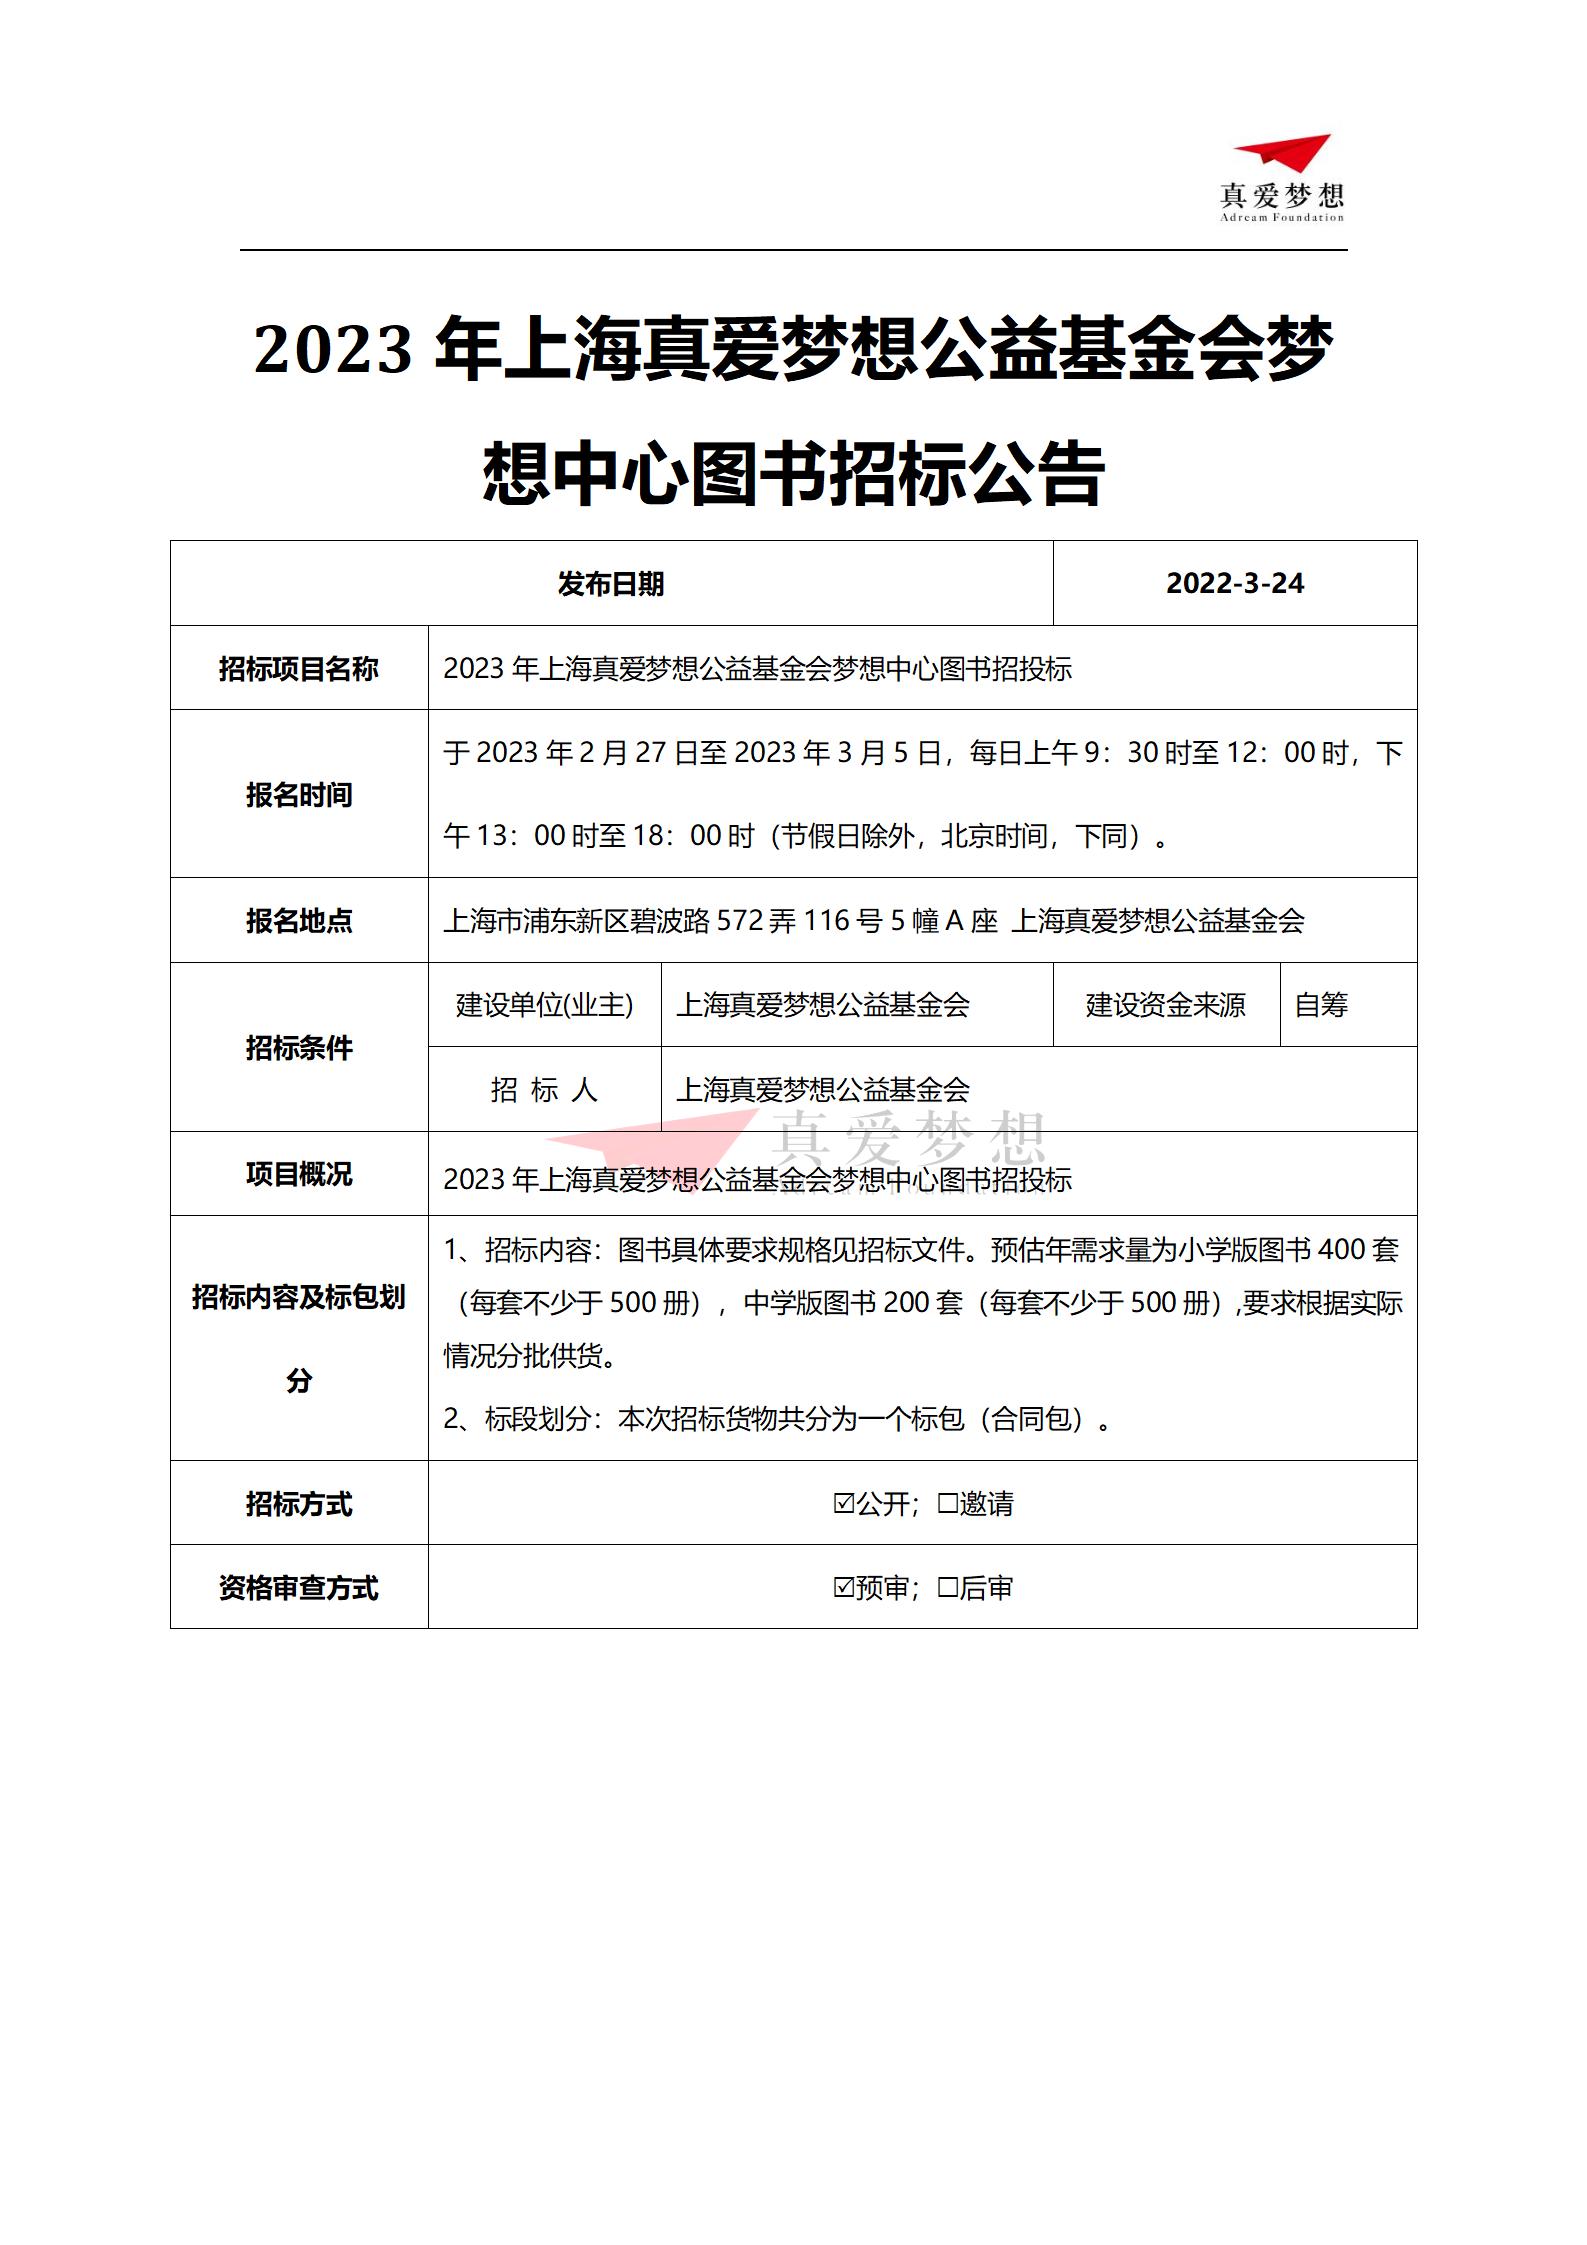 招标公告-2023年上海真爱梦想公益基金会梦想中心图书招标公告_01